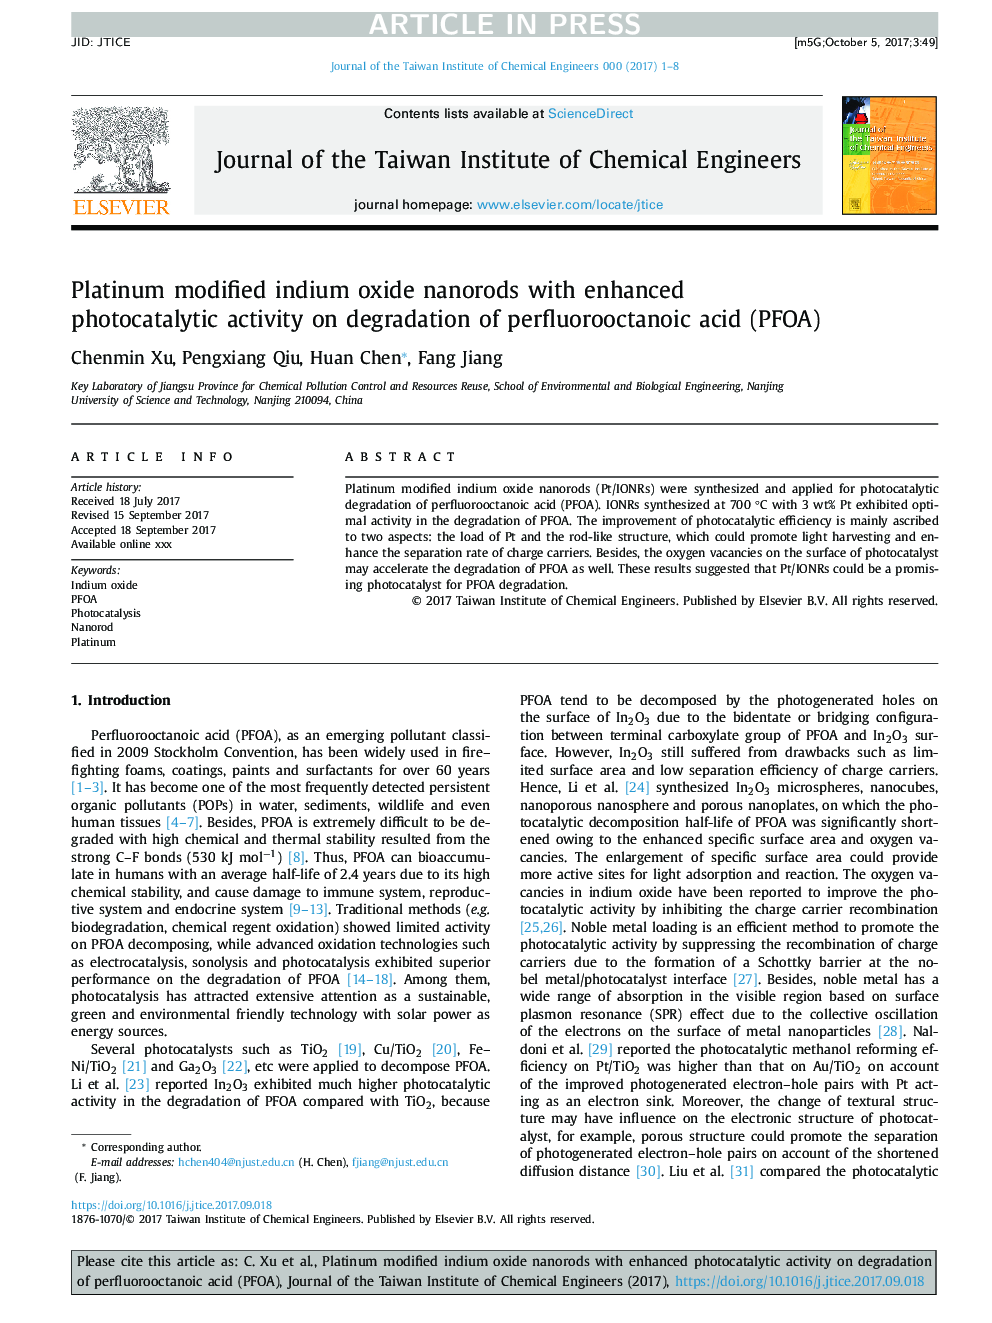 Platinum modified indium oxide nanorods with enhanced photocatalytic activity on degradation of perfluorooctanoic acid (PFOA)